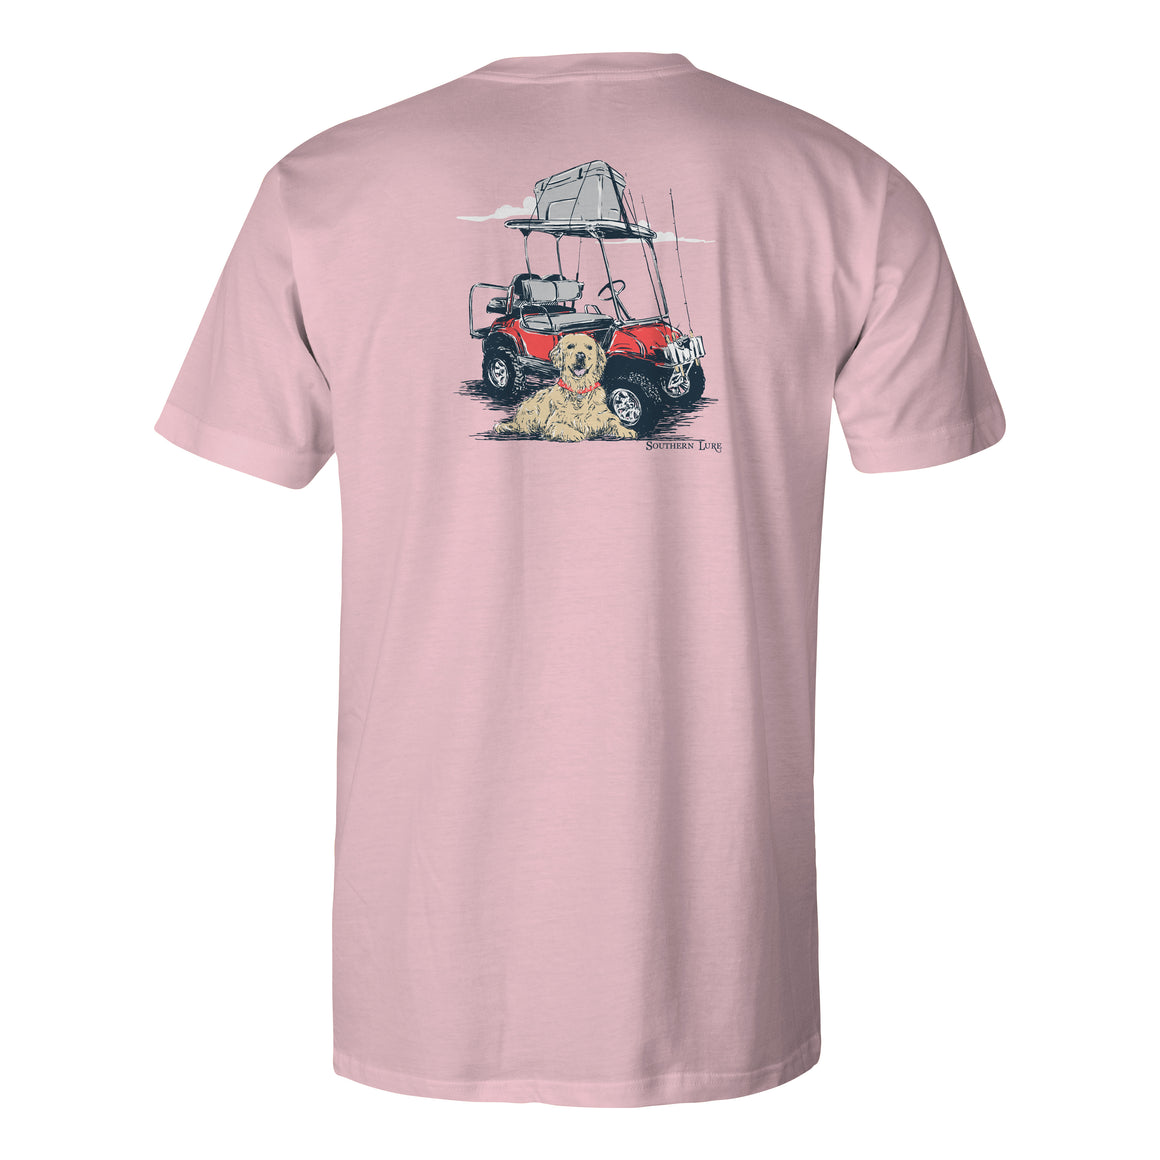 Youth & Toddler Cotton Tee - Fishing Cart V2 - Pink